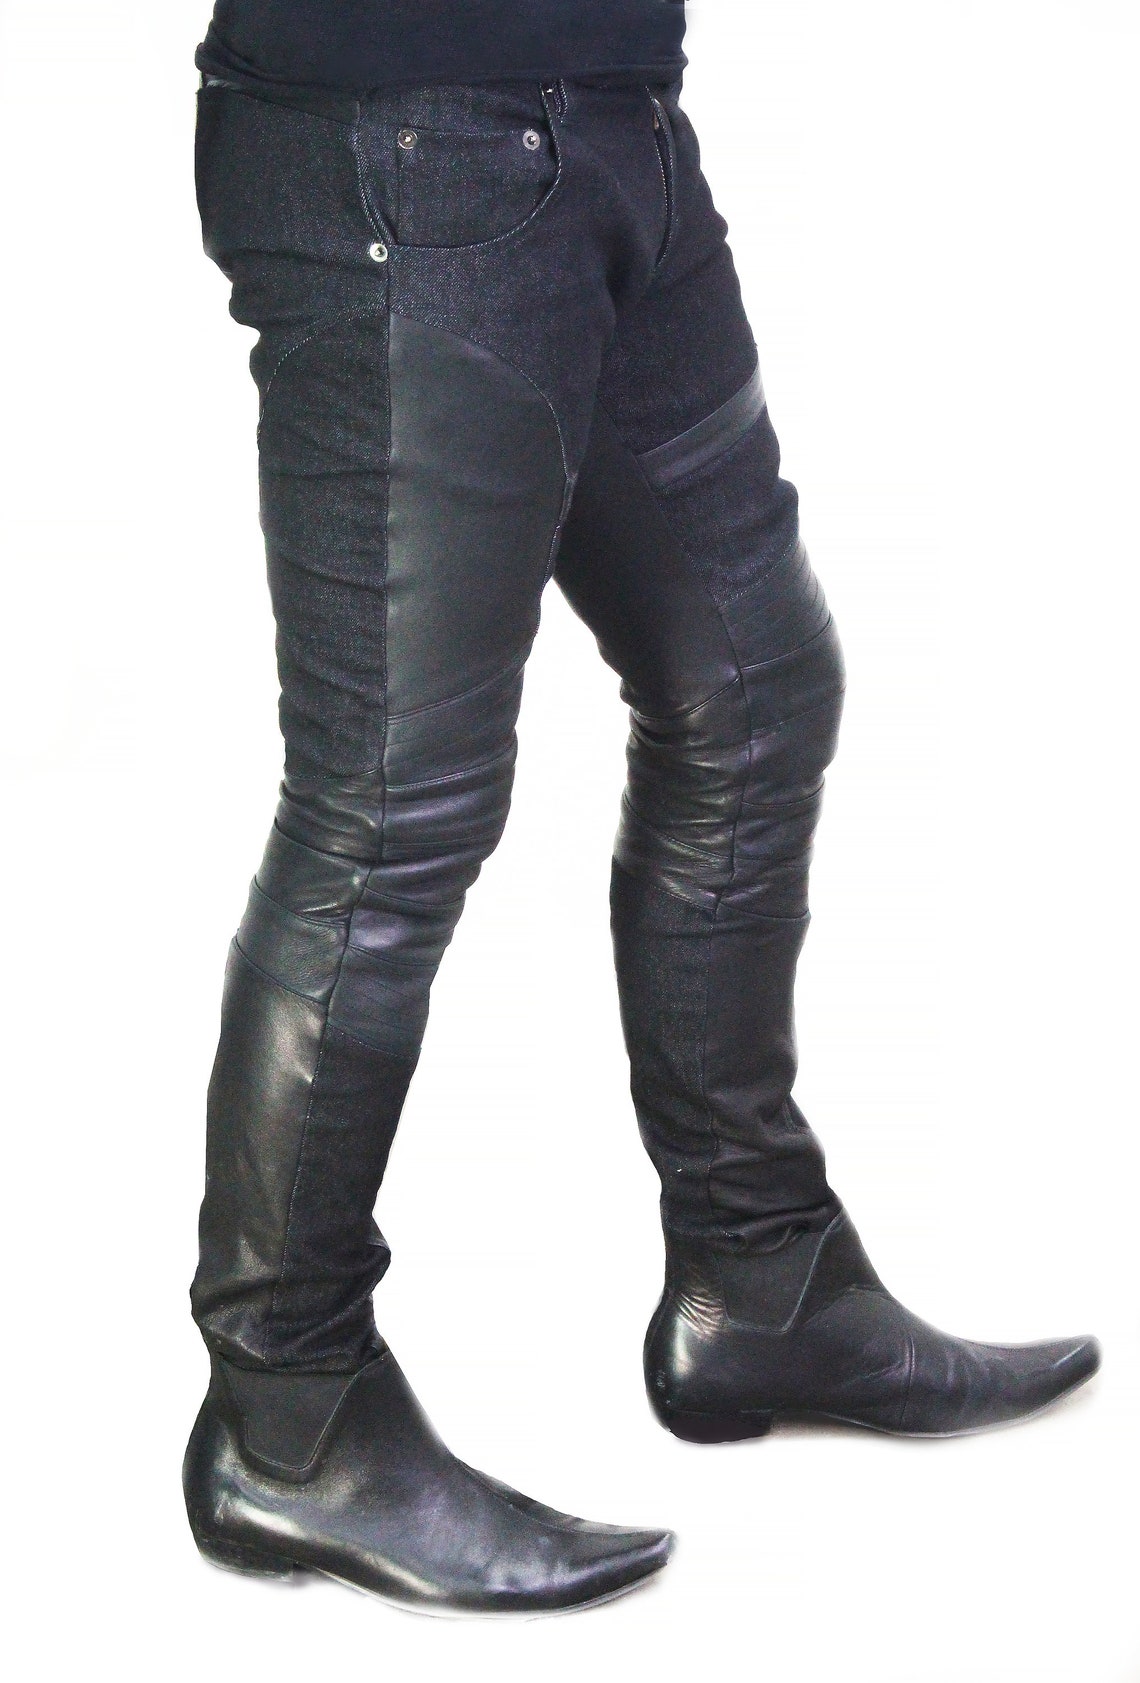 Witchcraft Skinny Pant Leather Denim Hybrid Pant - Etsy